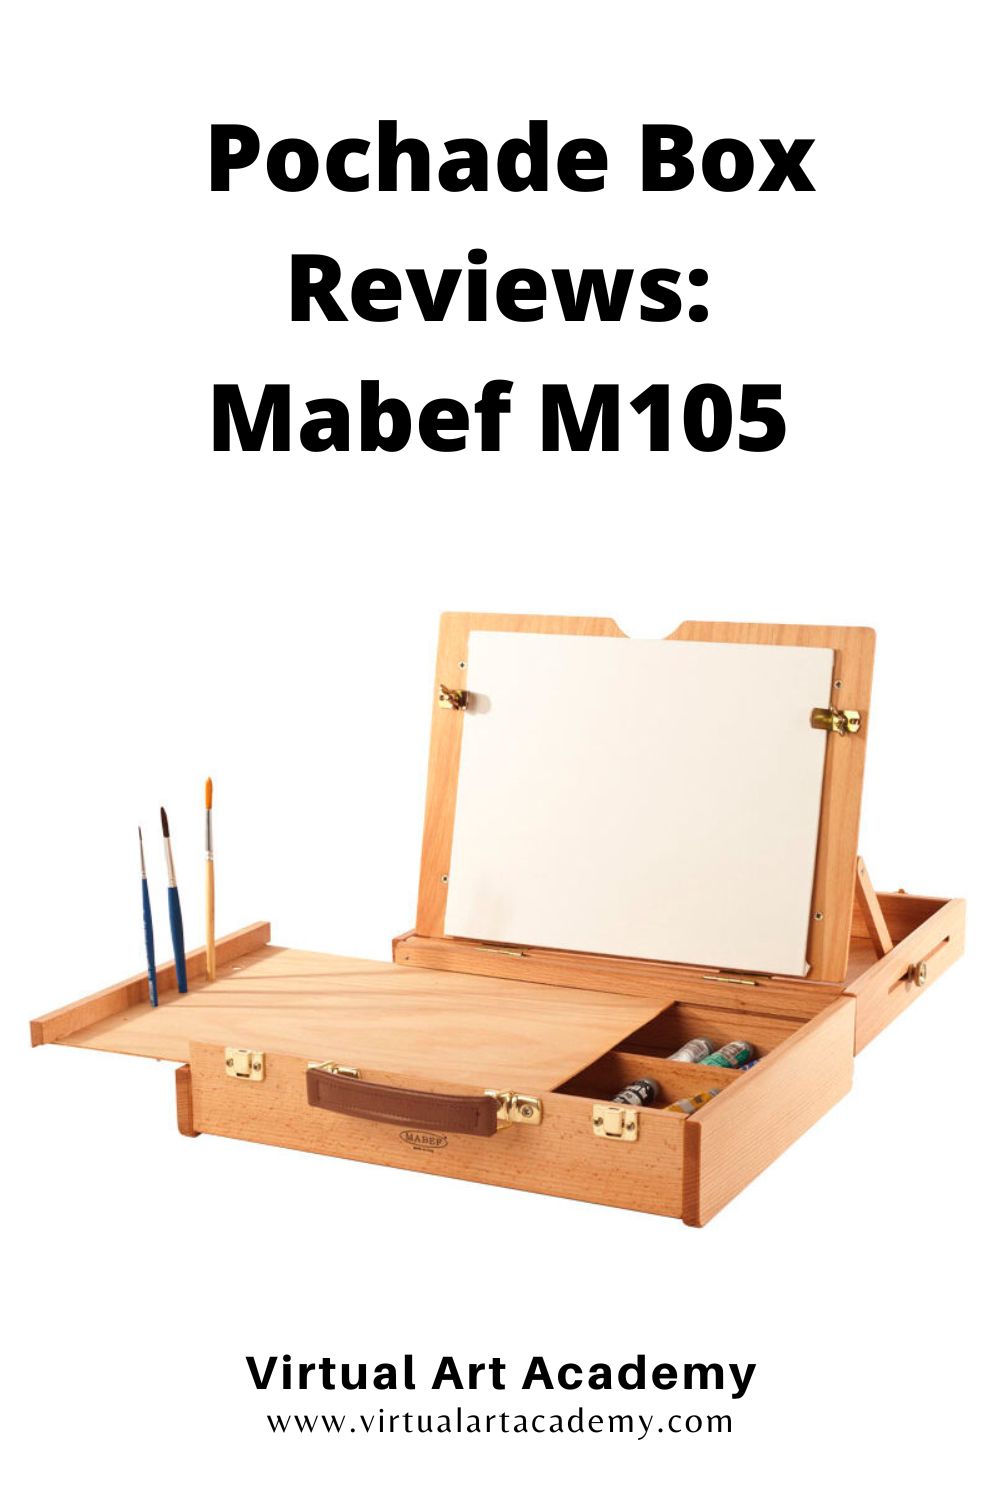 Mabef Pochade Box M105